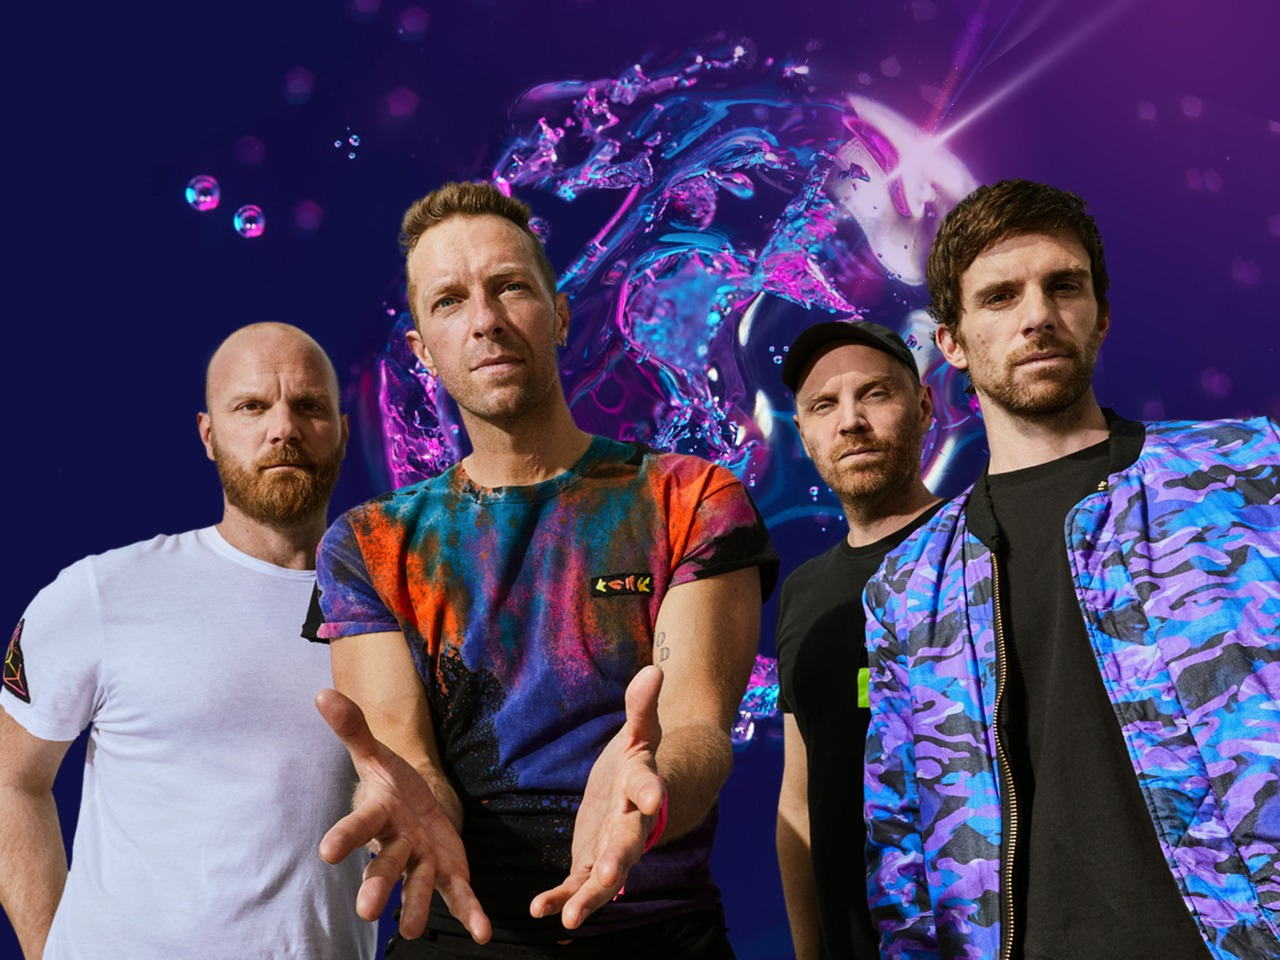 Após adiar shows, banda Coldplay faz turnê no Brasil em março de 2023 Rádio BandNews FM